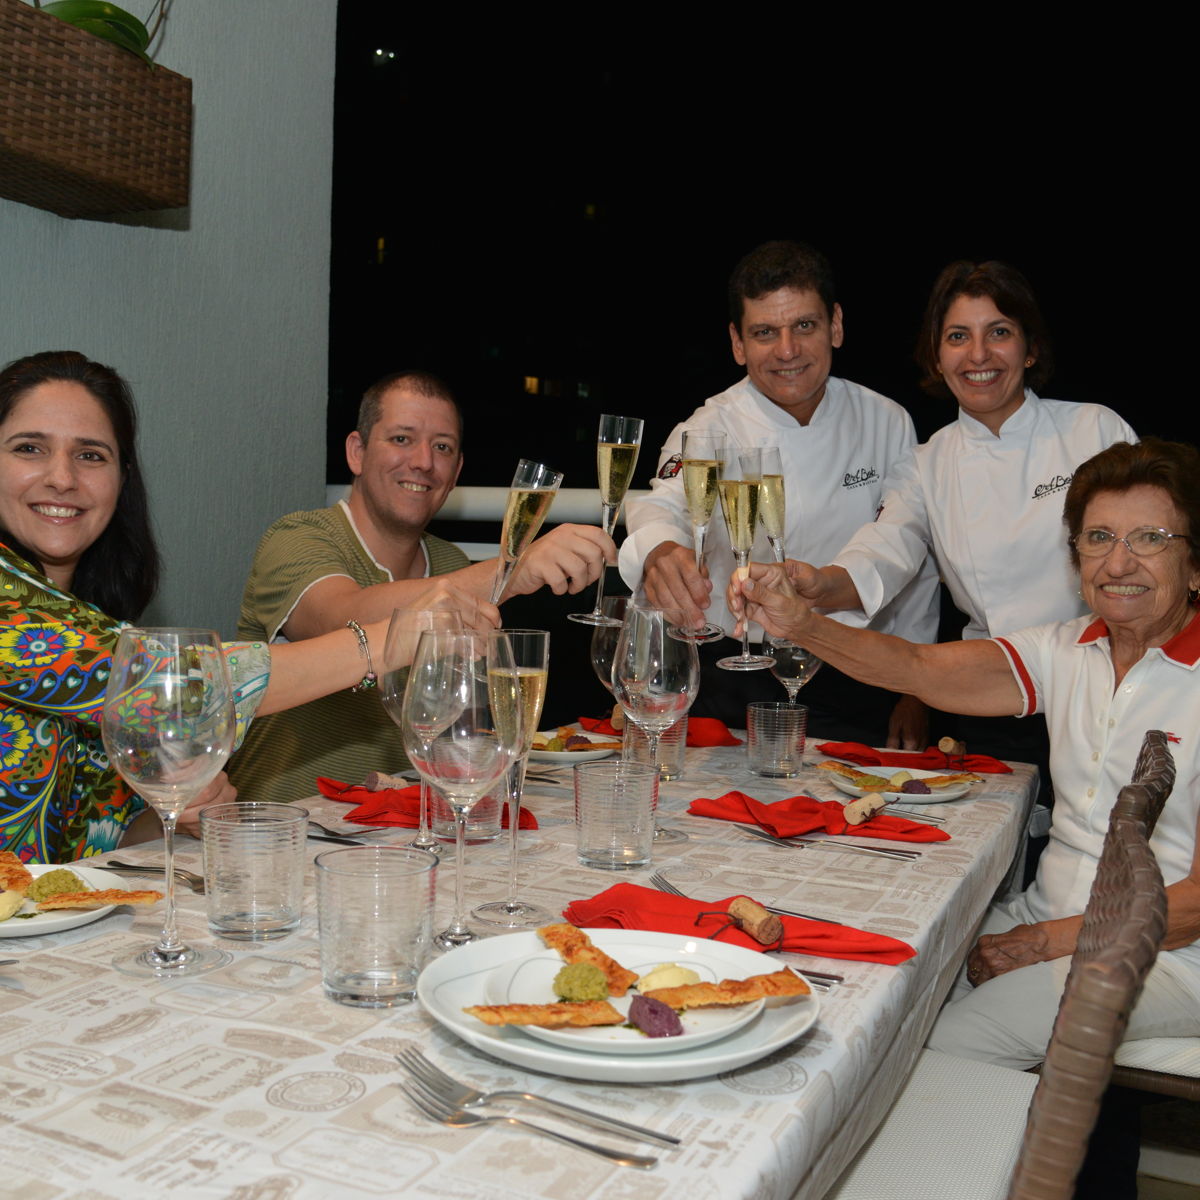 Gourmet 5 course dinner in Rio!